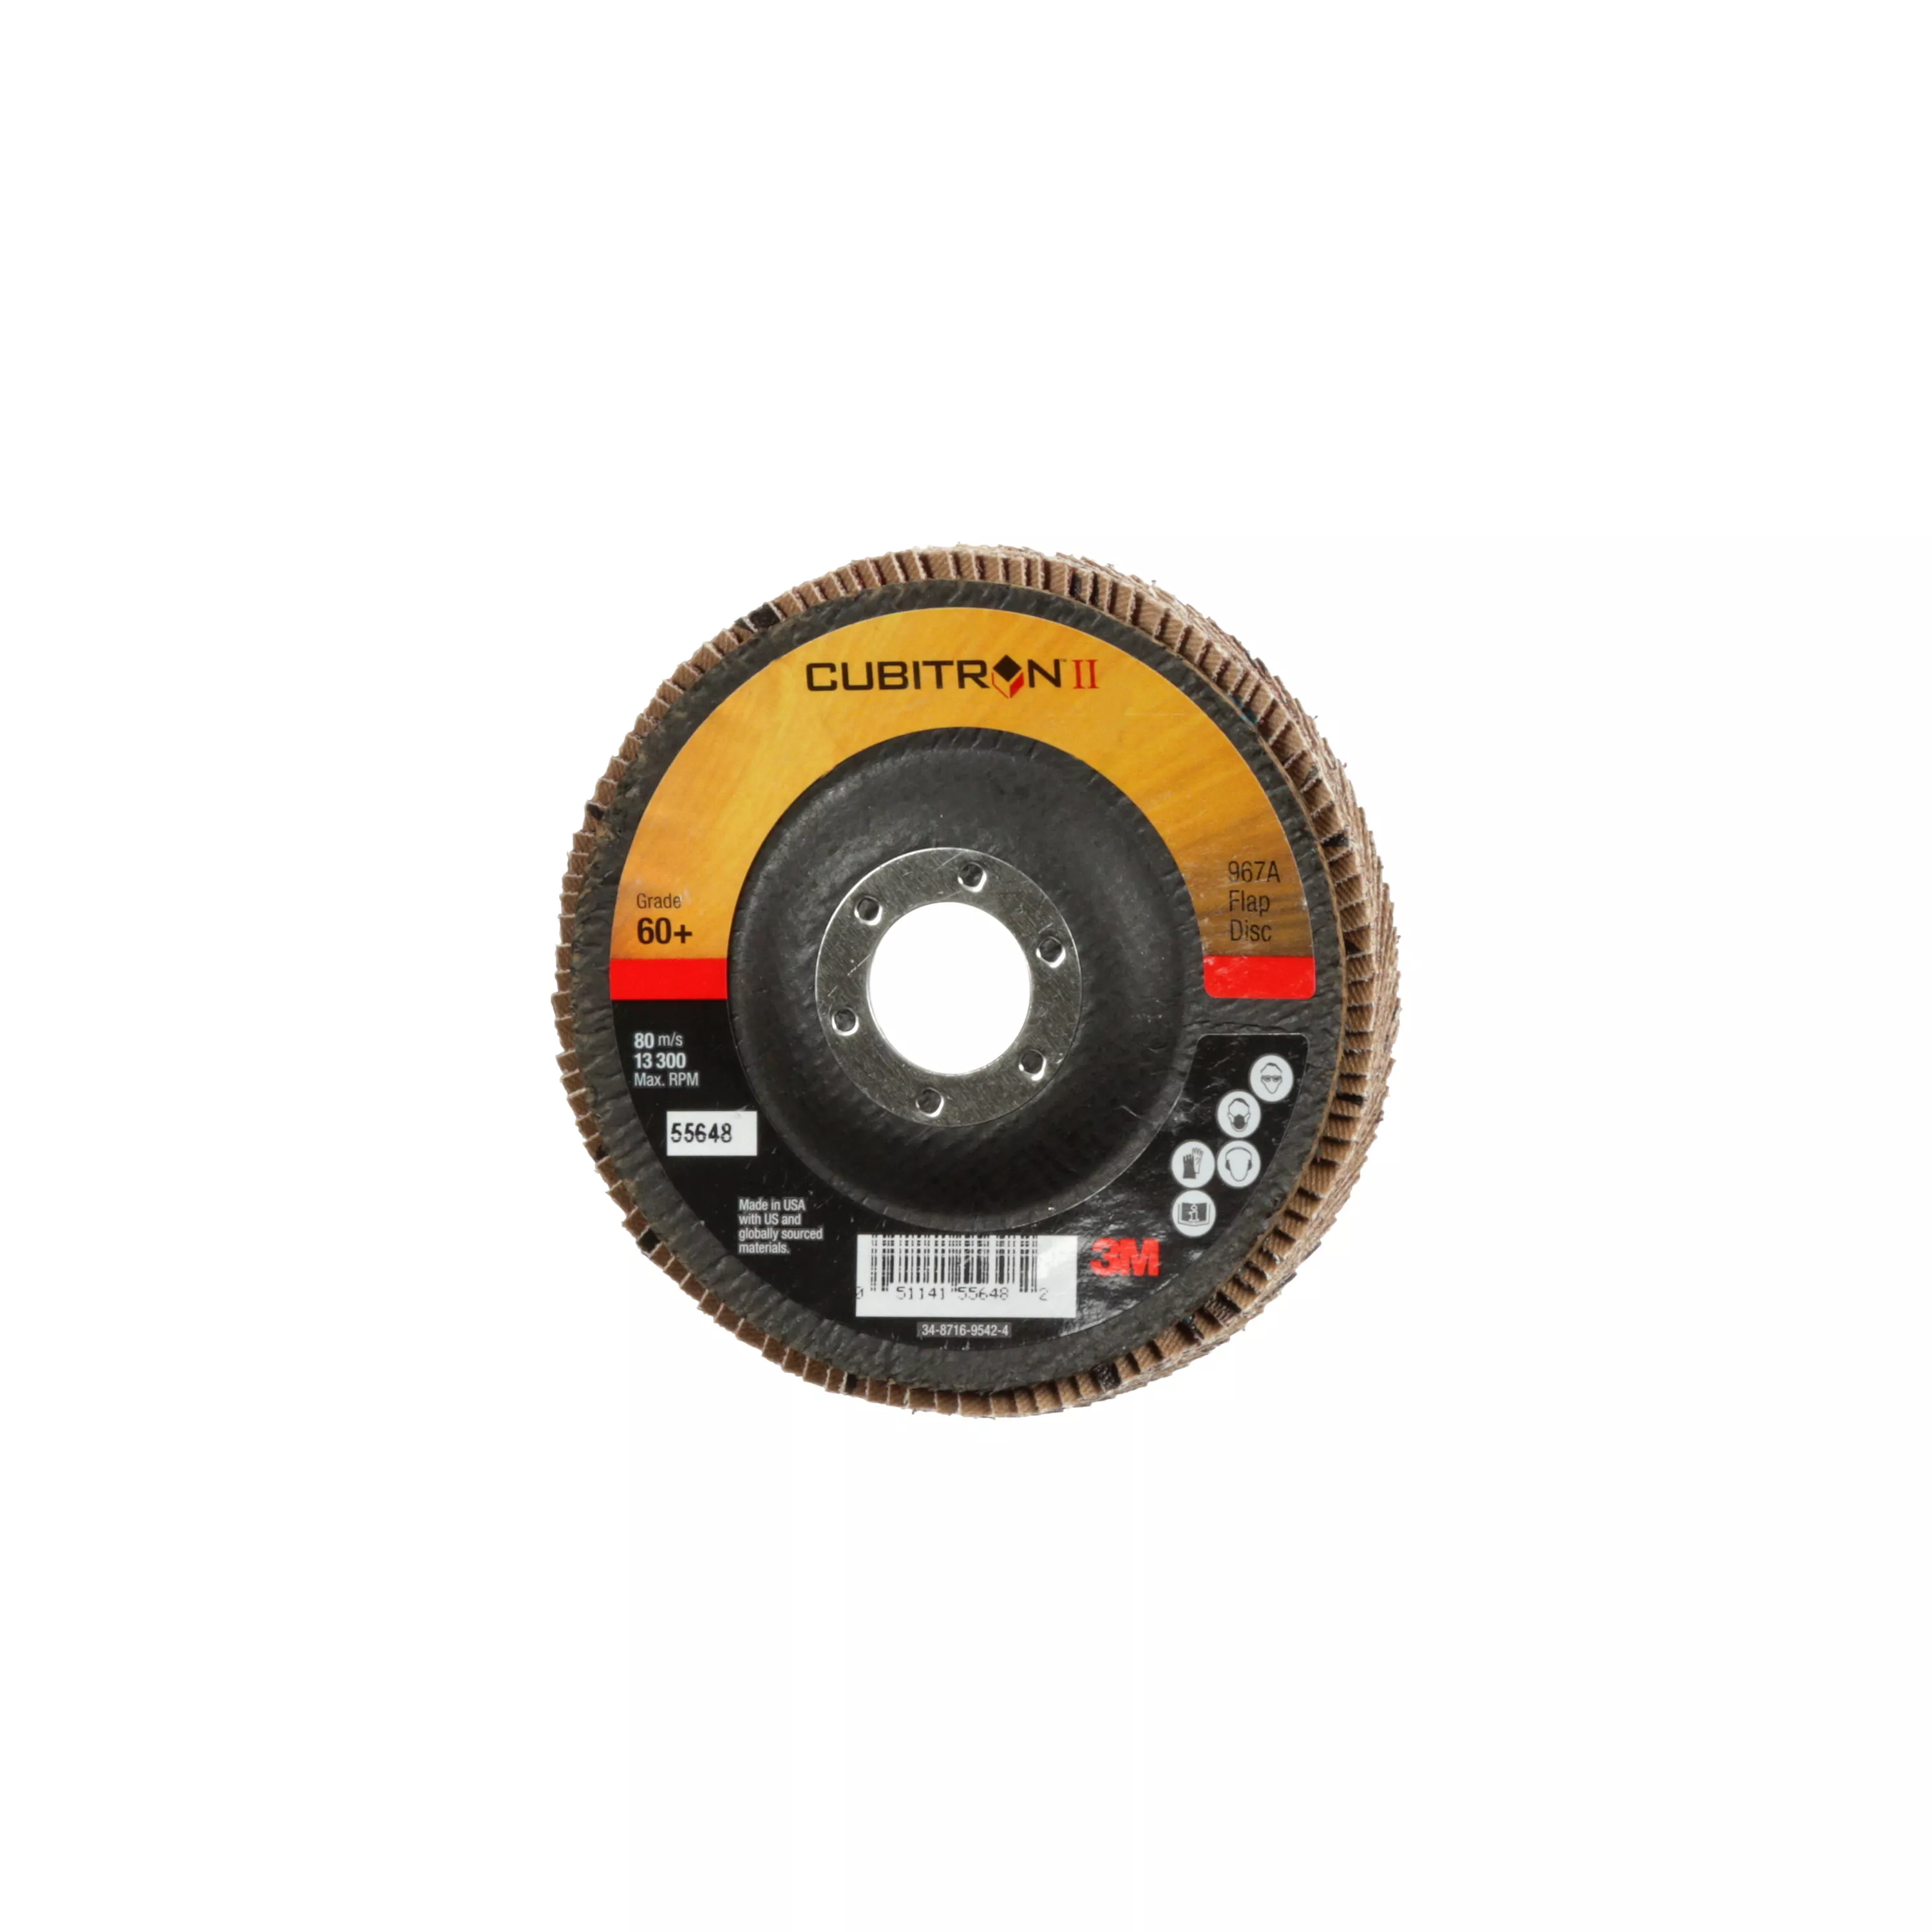 SKU 7010292540 | 3M™ Cubitron™ II Flap Disc 967A